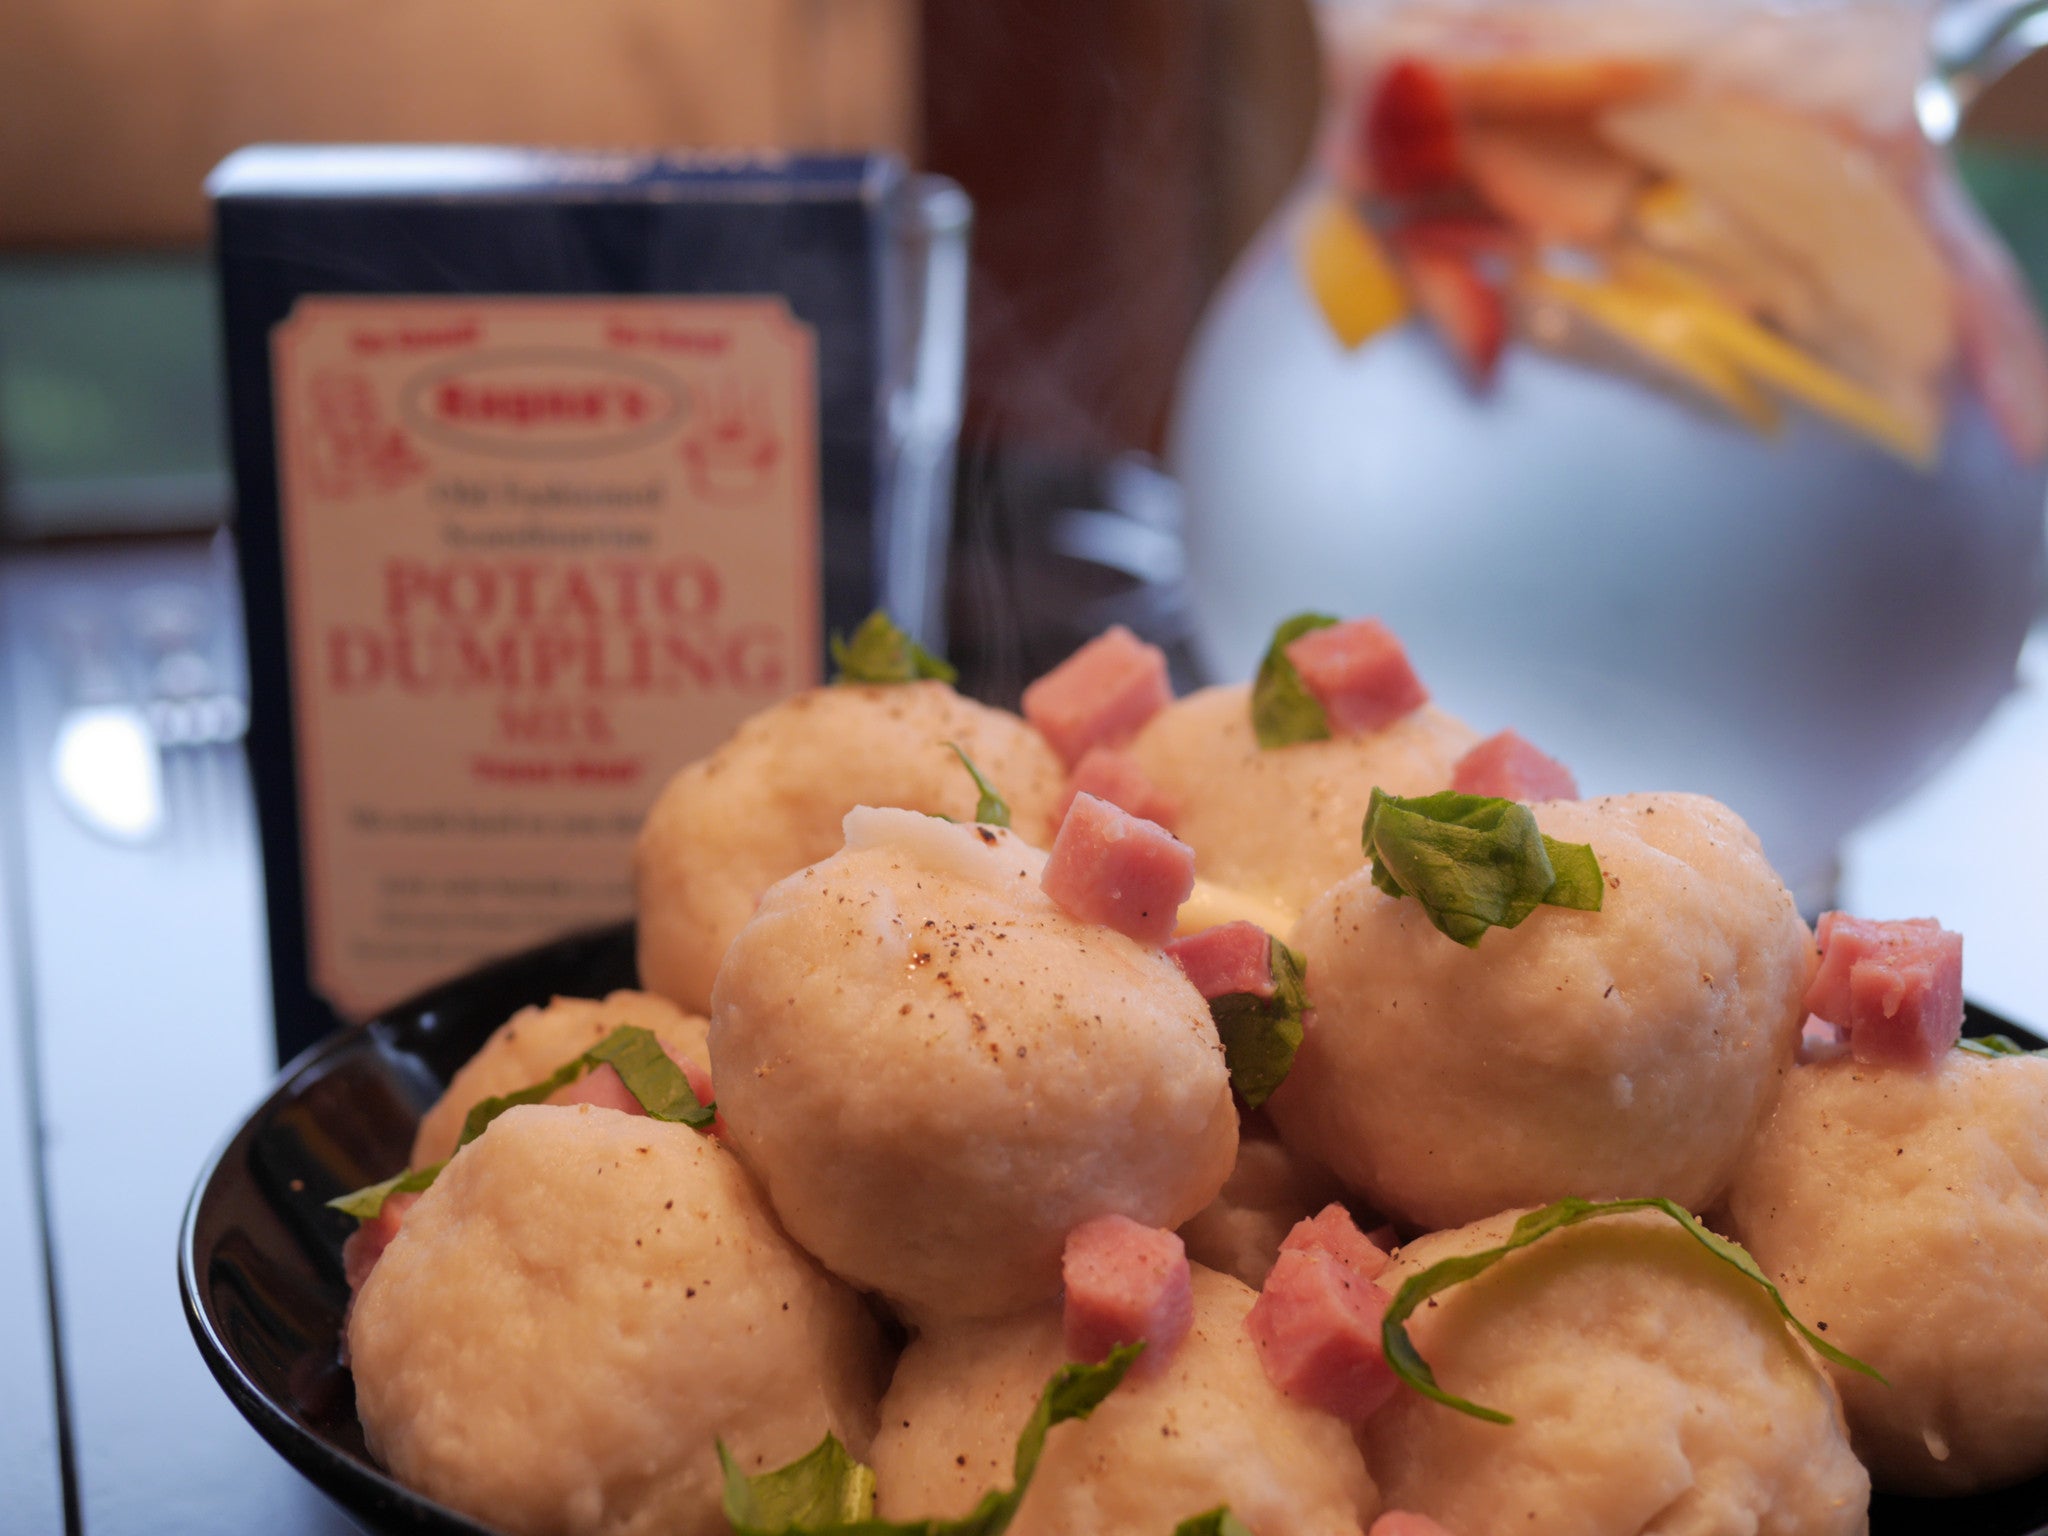 Ragna's Old Fashioned Scandinavian Potato Dumpling Mix, Potet Klub, 16 oz